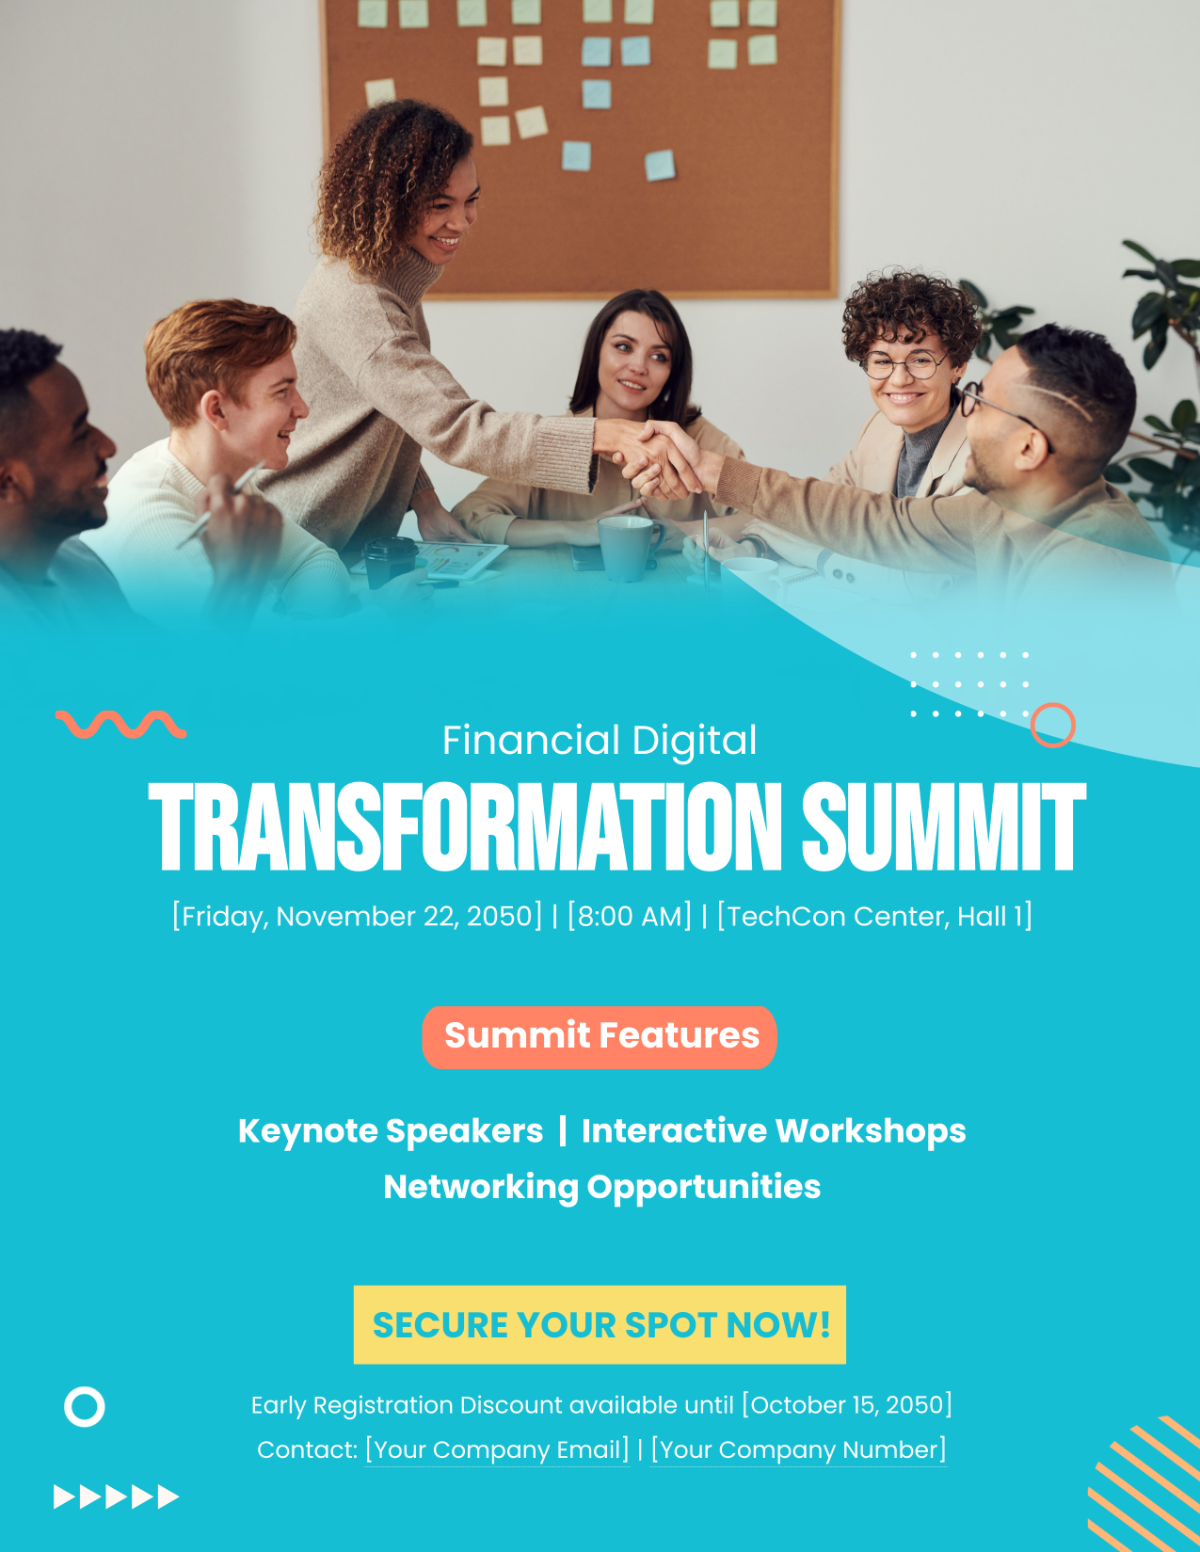 Financial Digital Transformation Summit Flyer